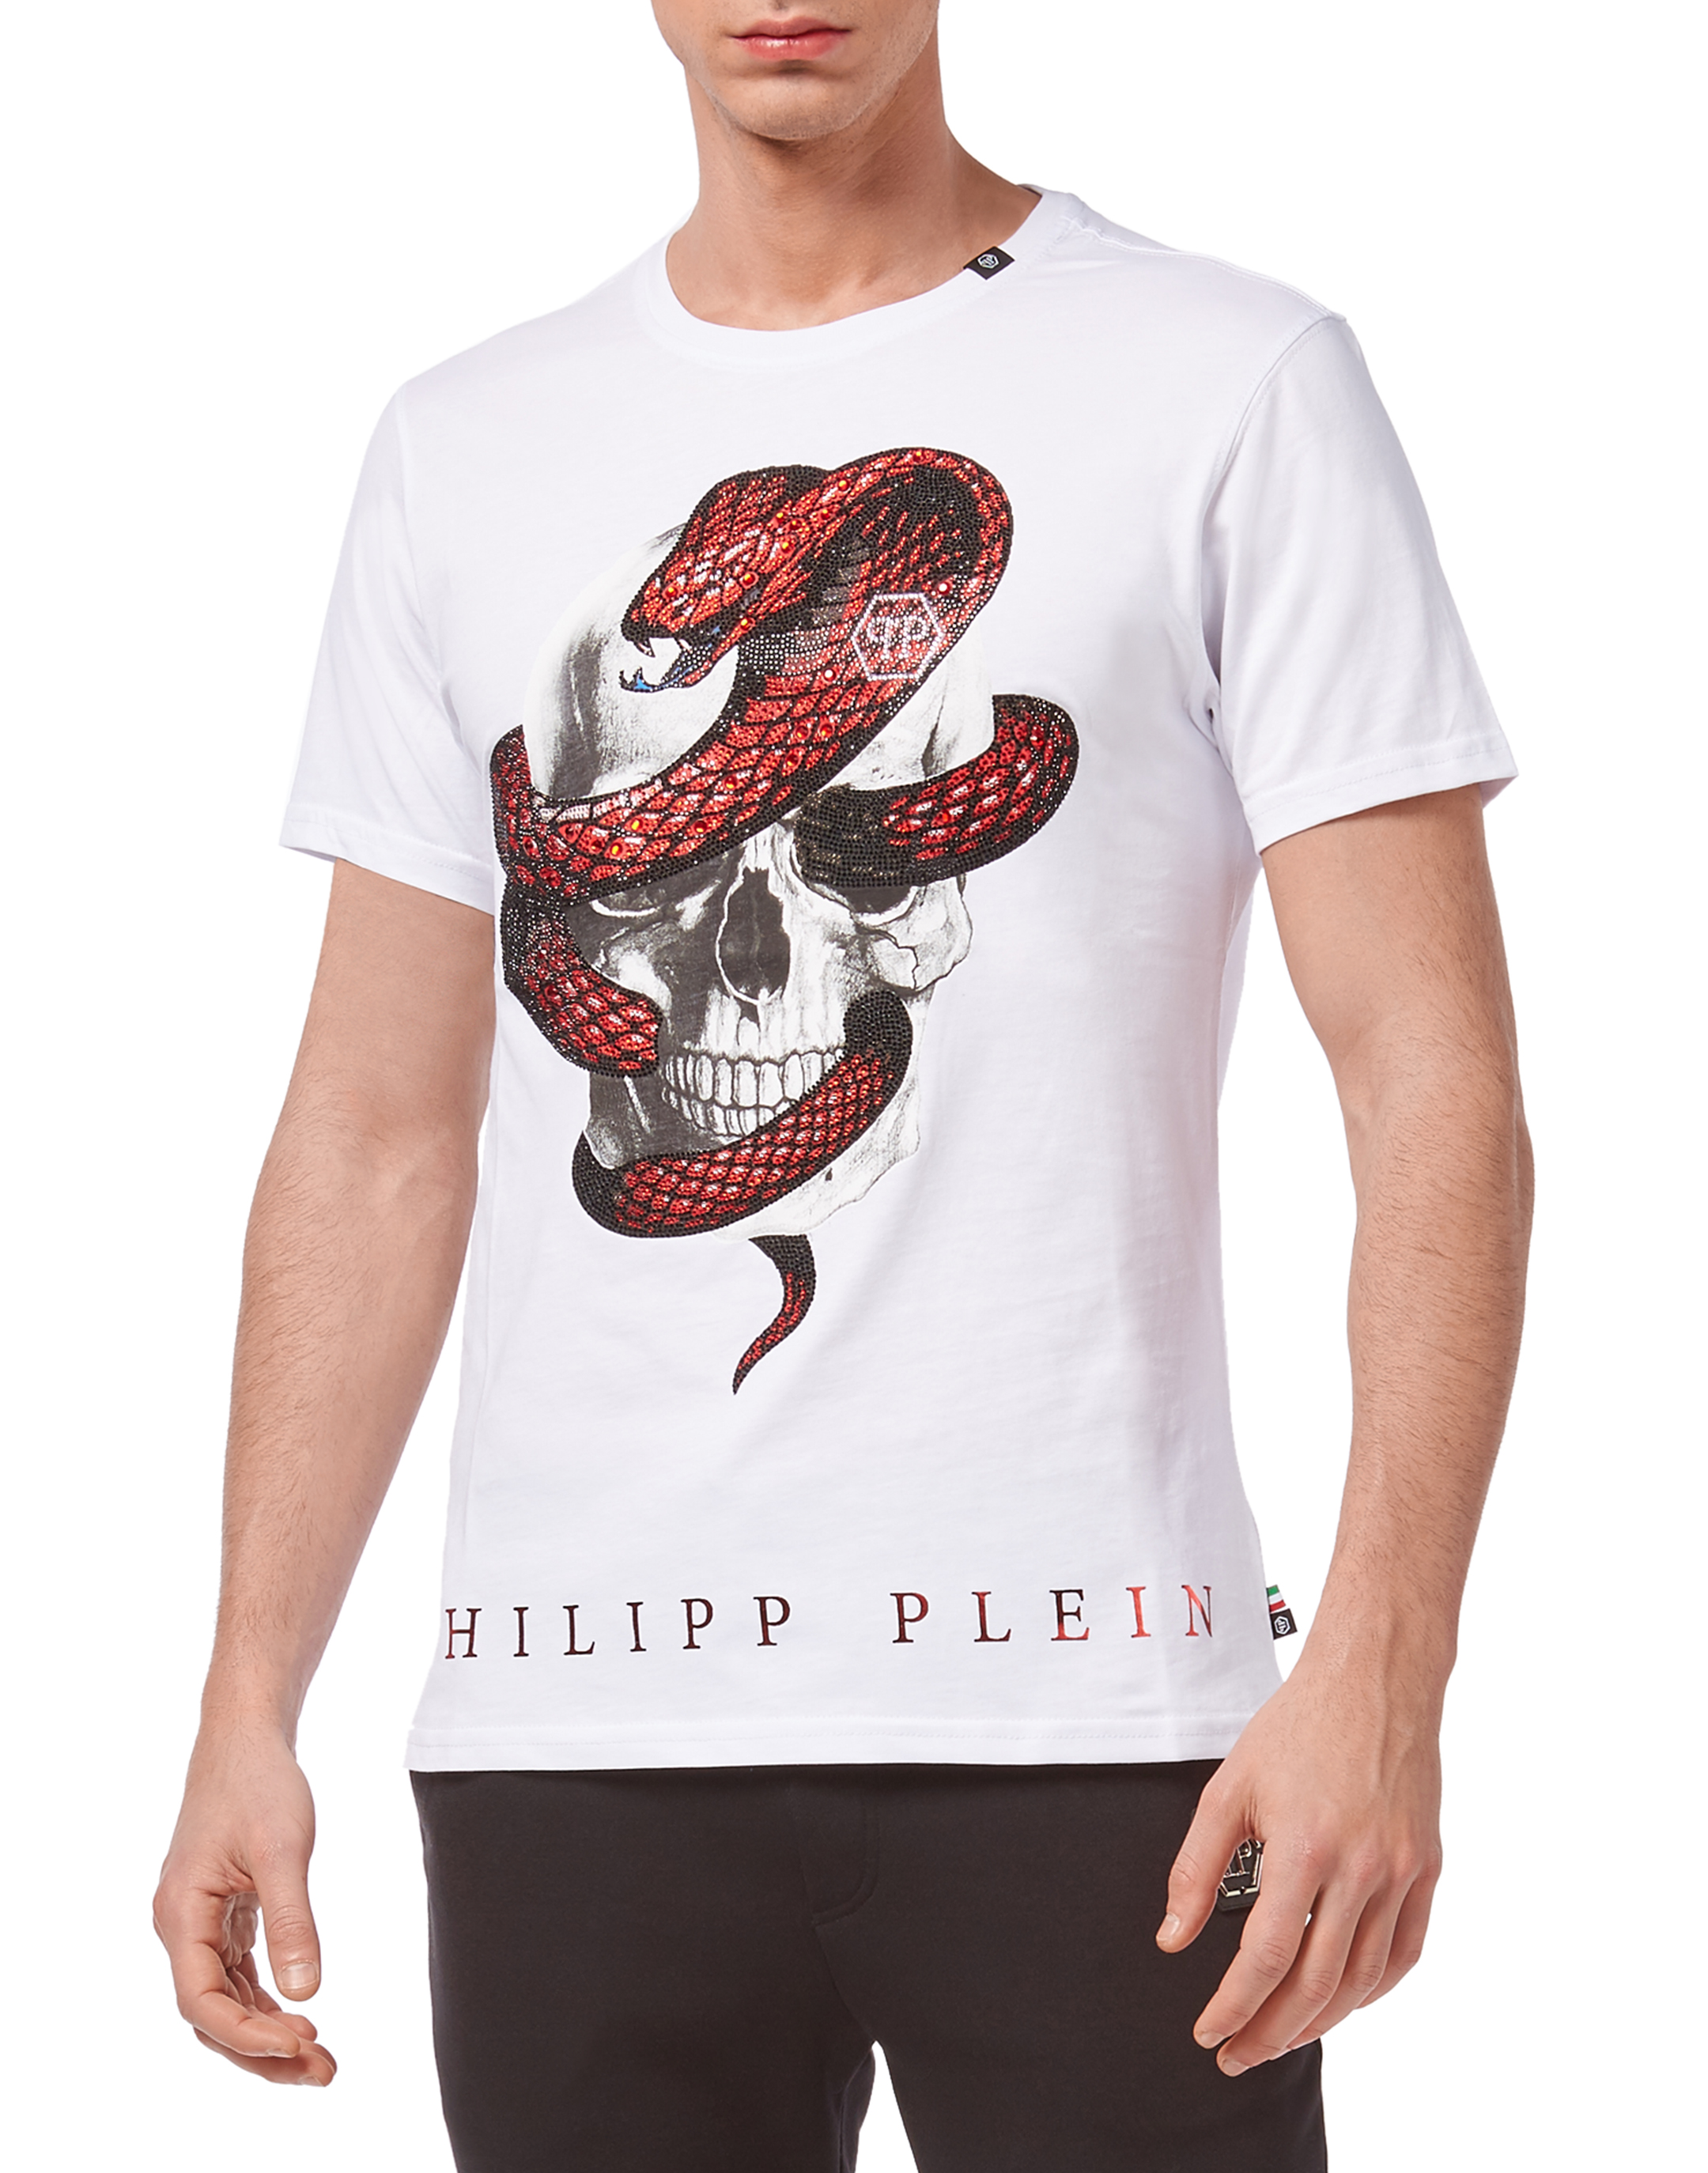 philipp plein cobra